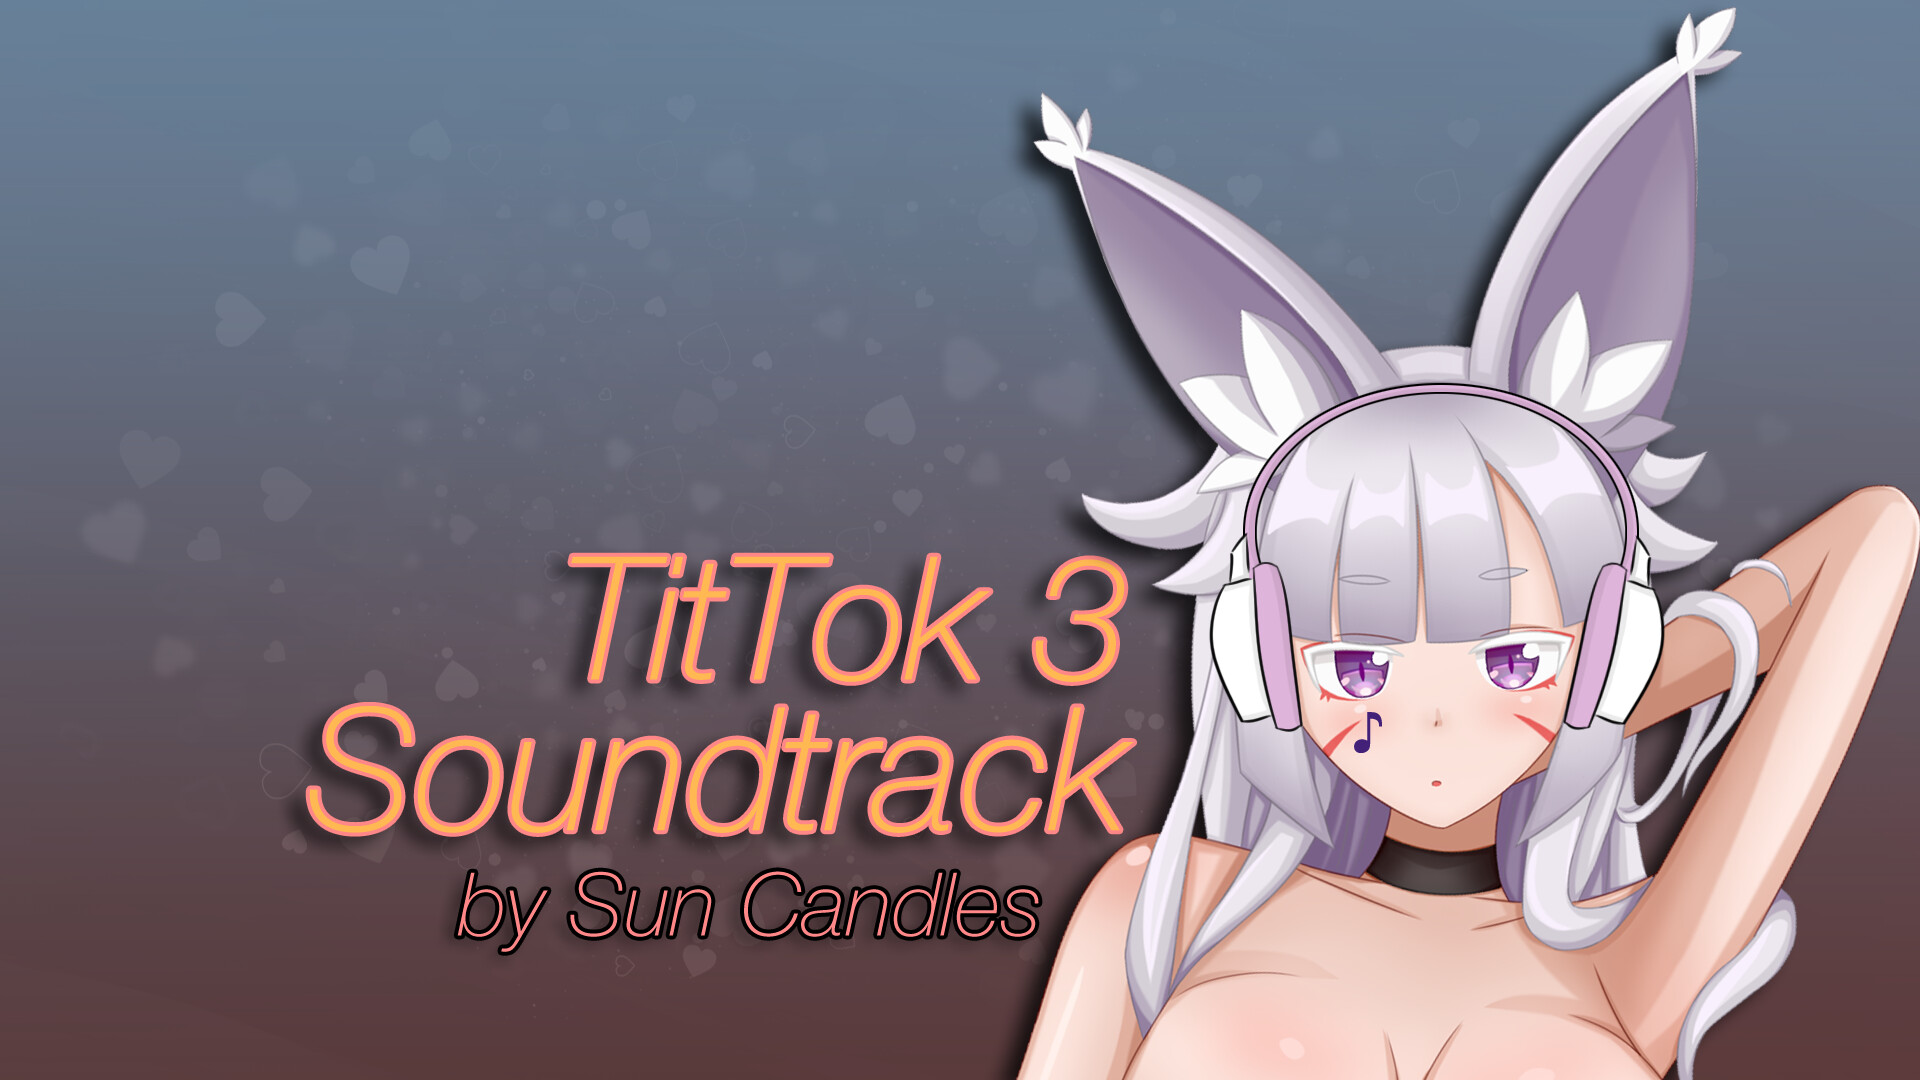 TitTok 3 Soundtrack Featured Screenshot #1